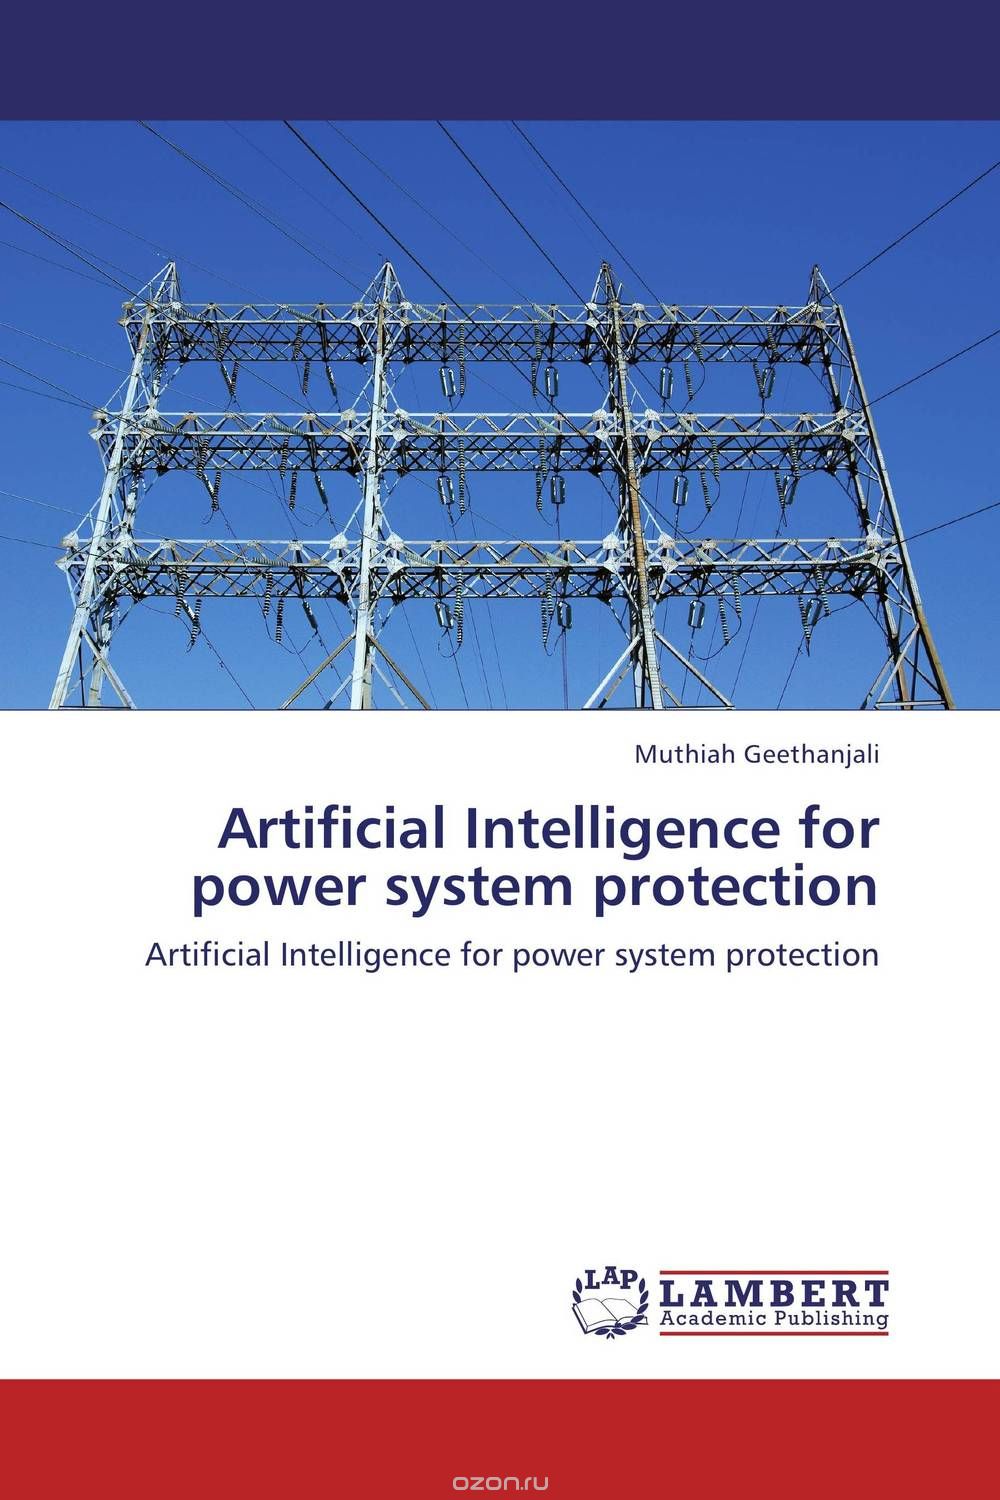 Скачать книгу "Artificial Intelligence for power system protection"